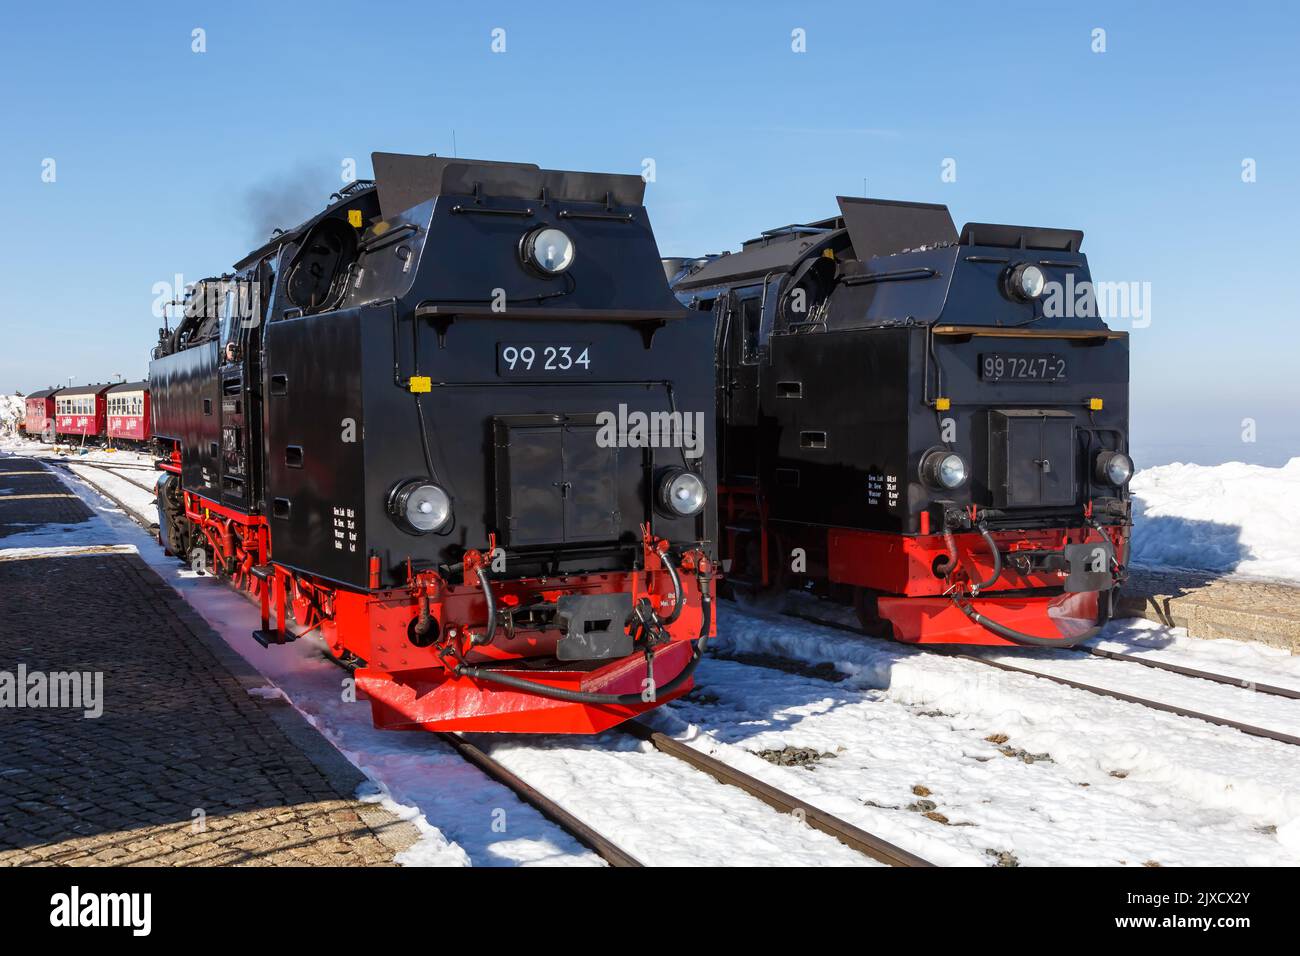 Brockenbahn treni a vapore locomotive ferrovia sul monte Brocken in Germania Foto Stock